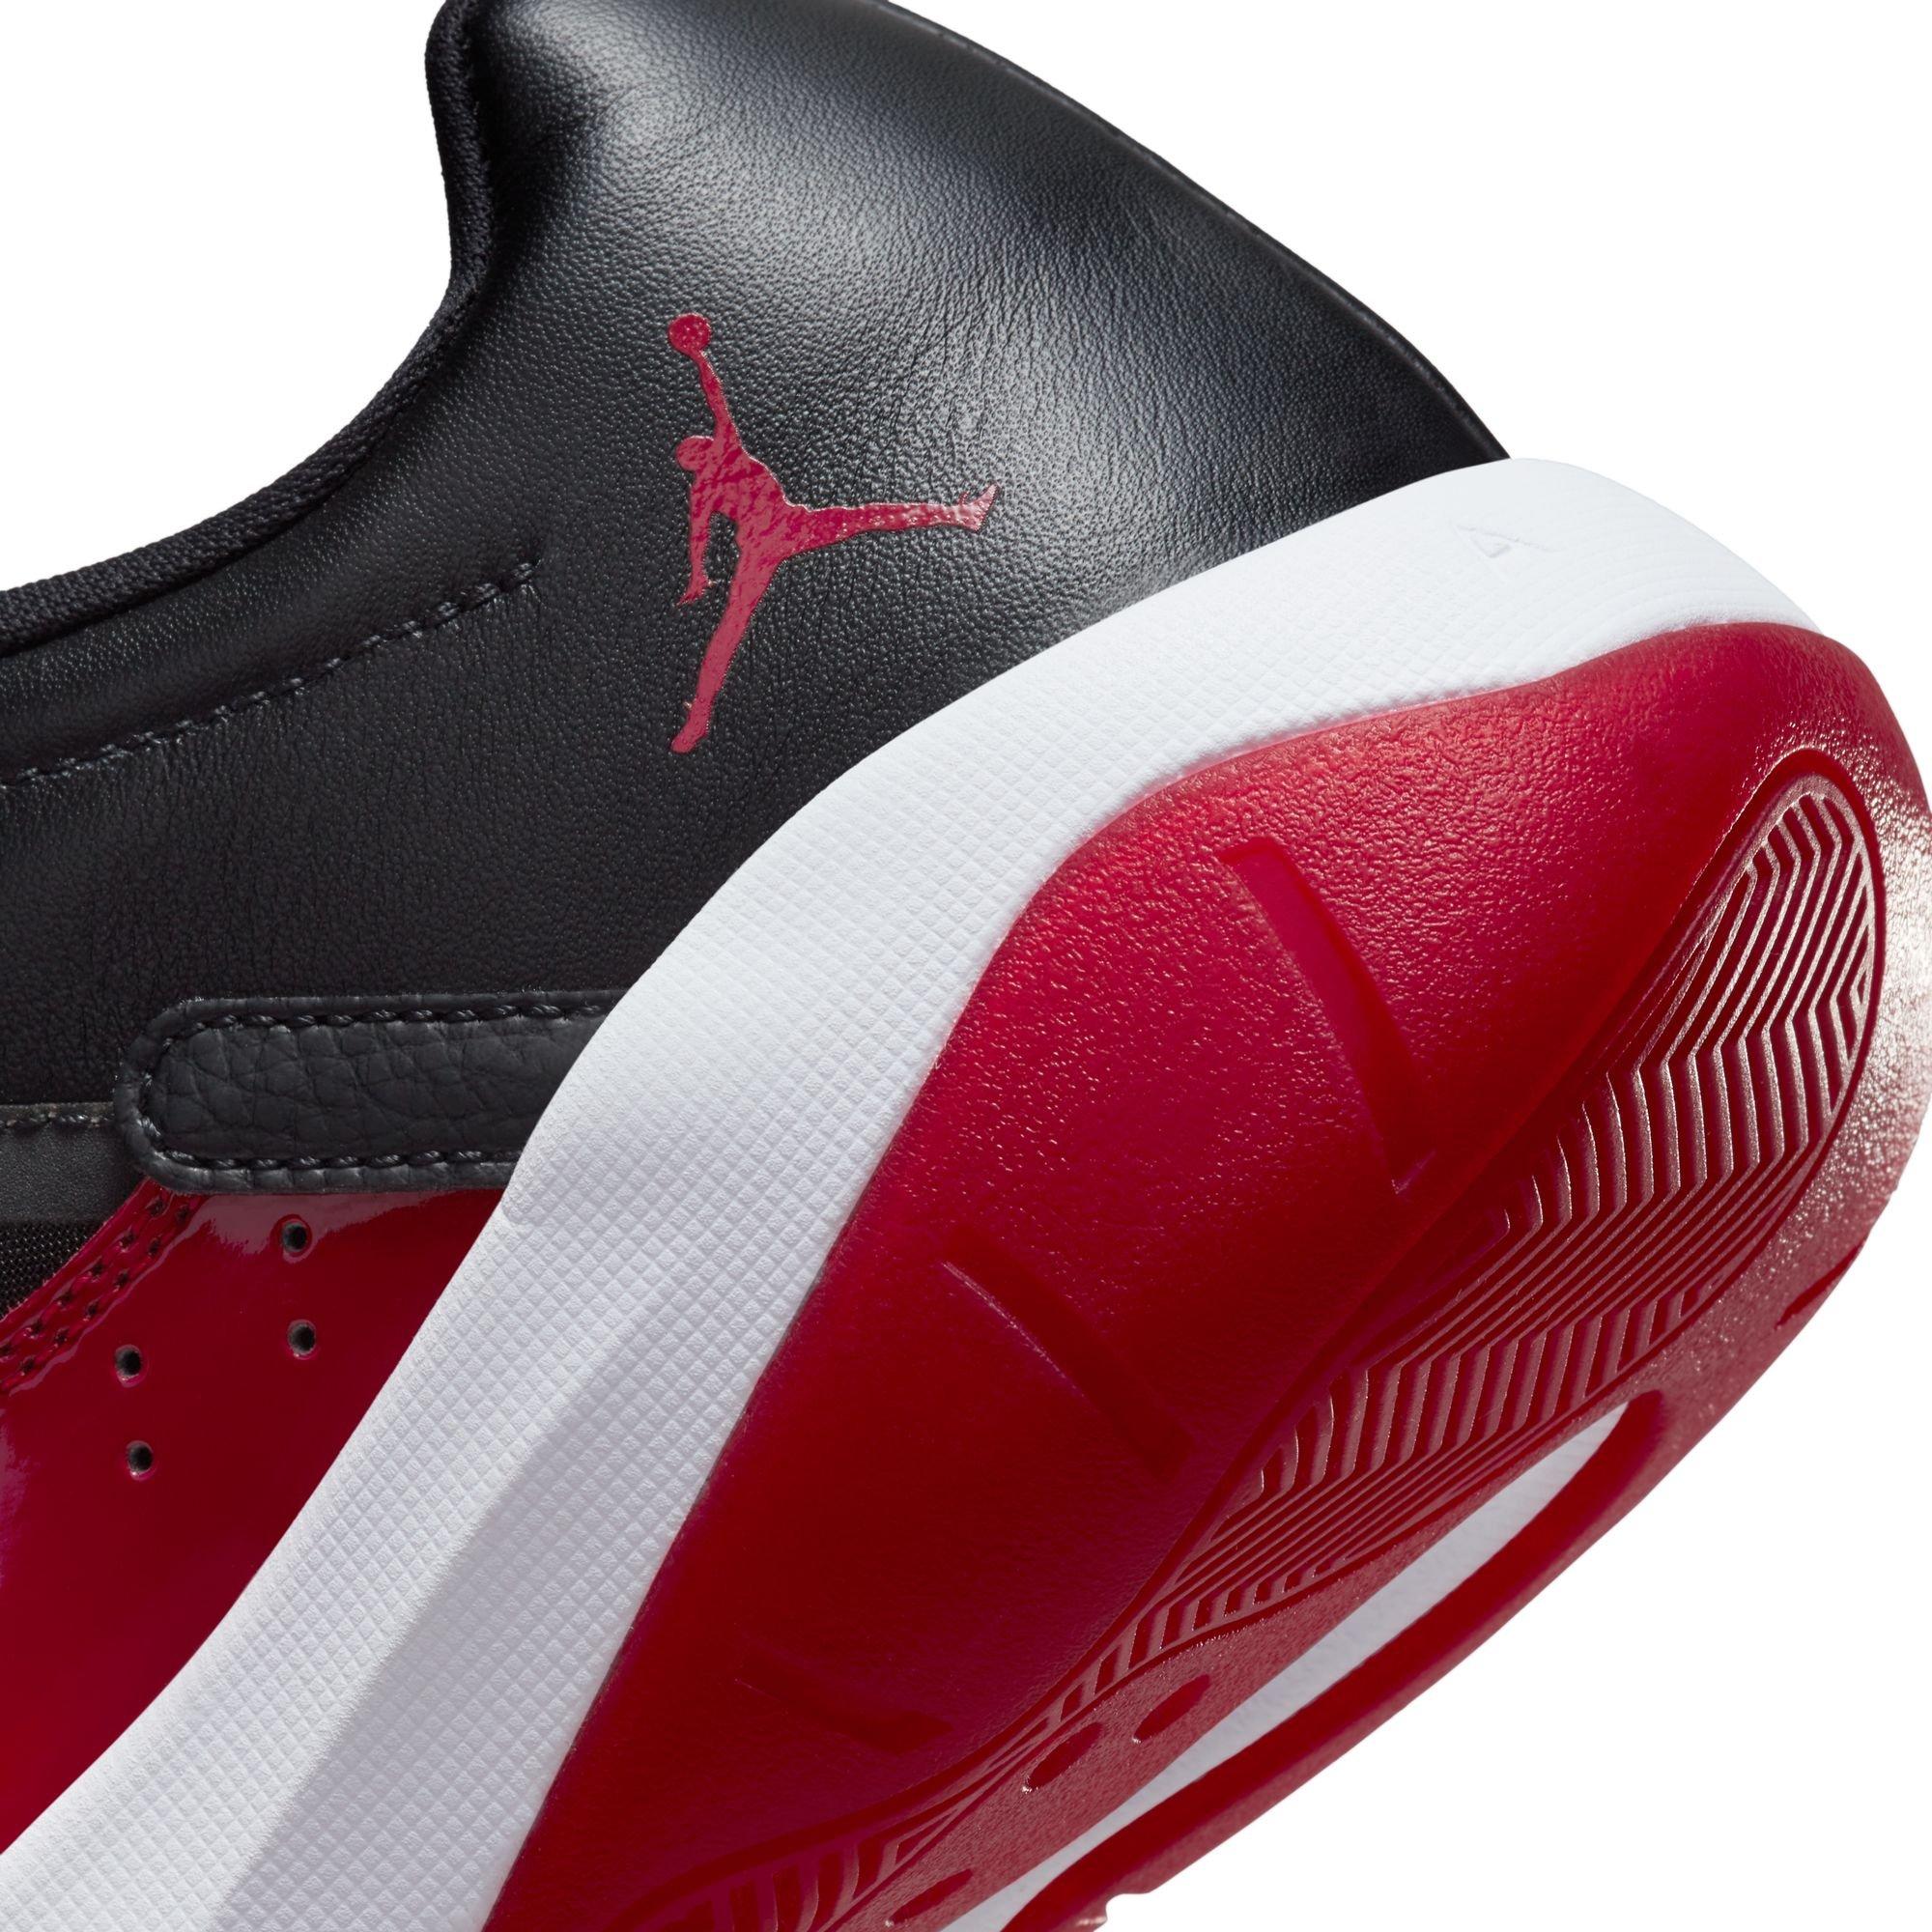 Air Jordan 11 Comfort Low Black / White - Gym Red